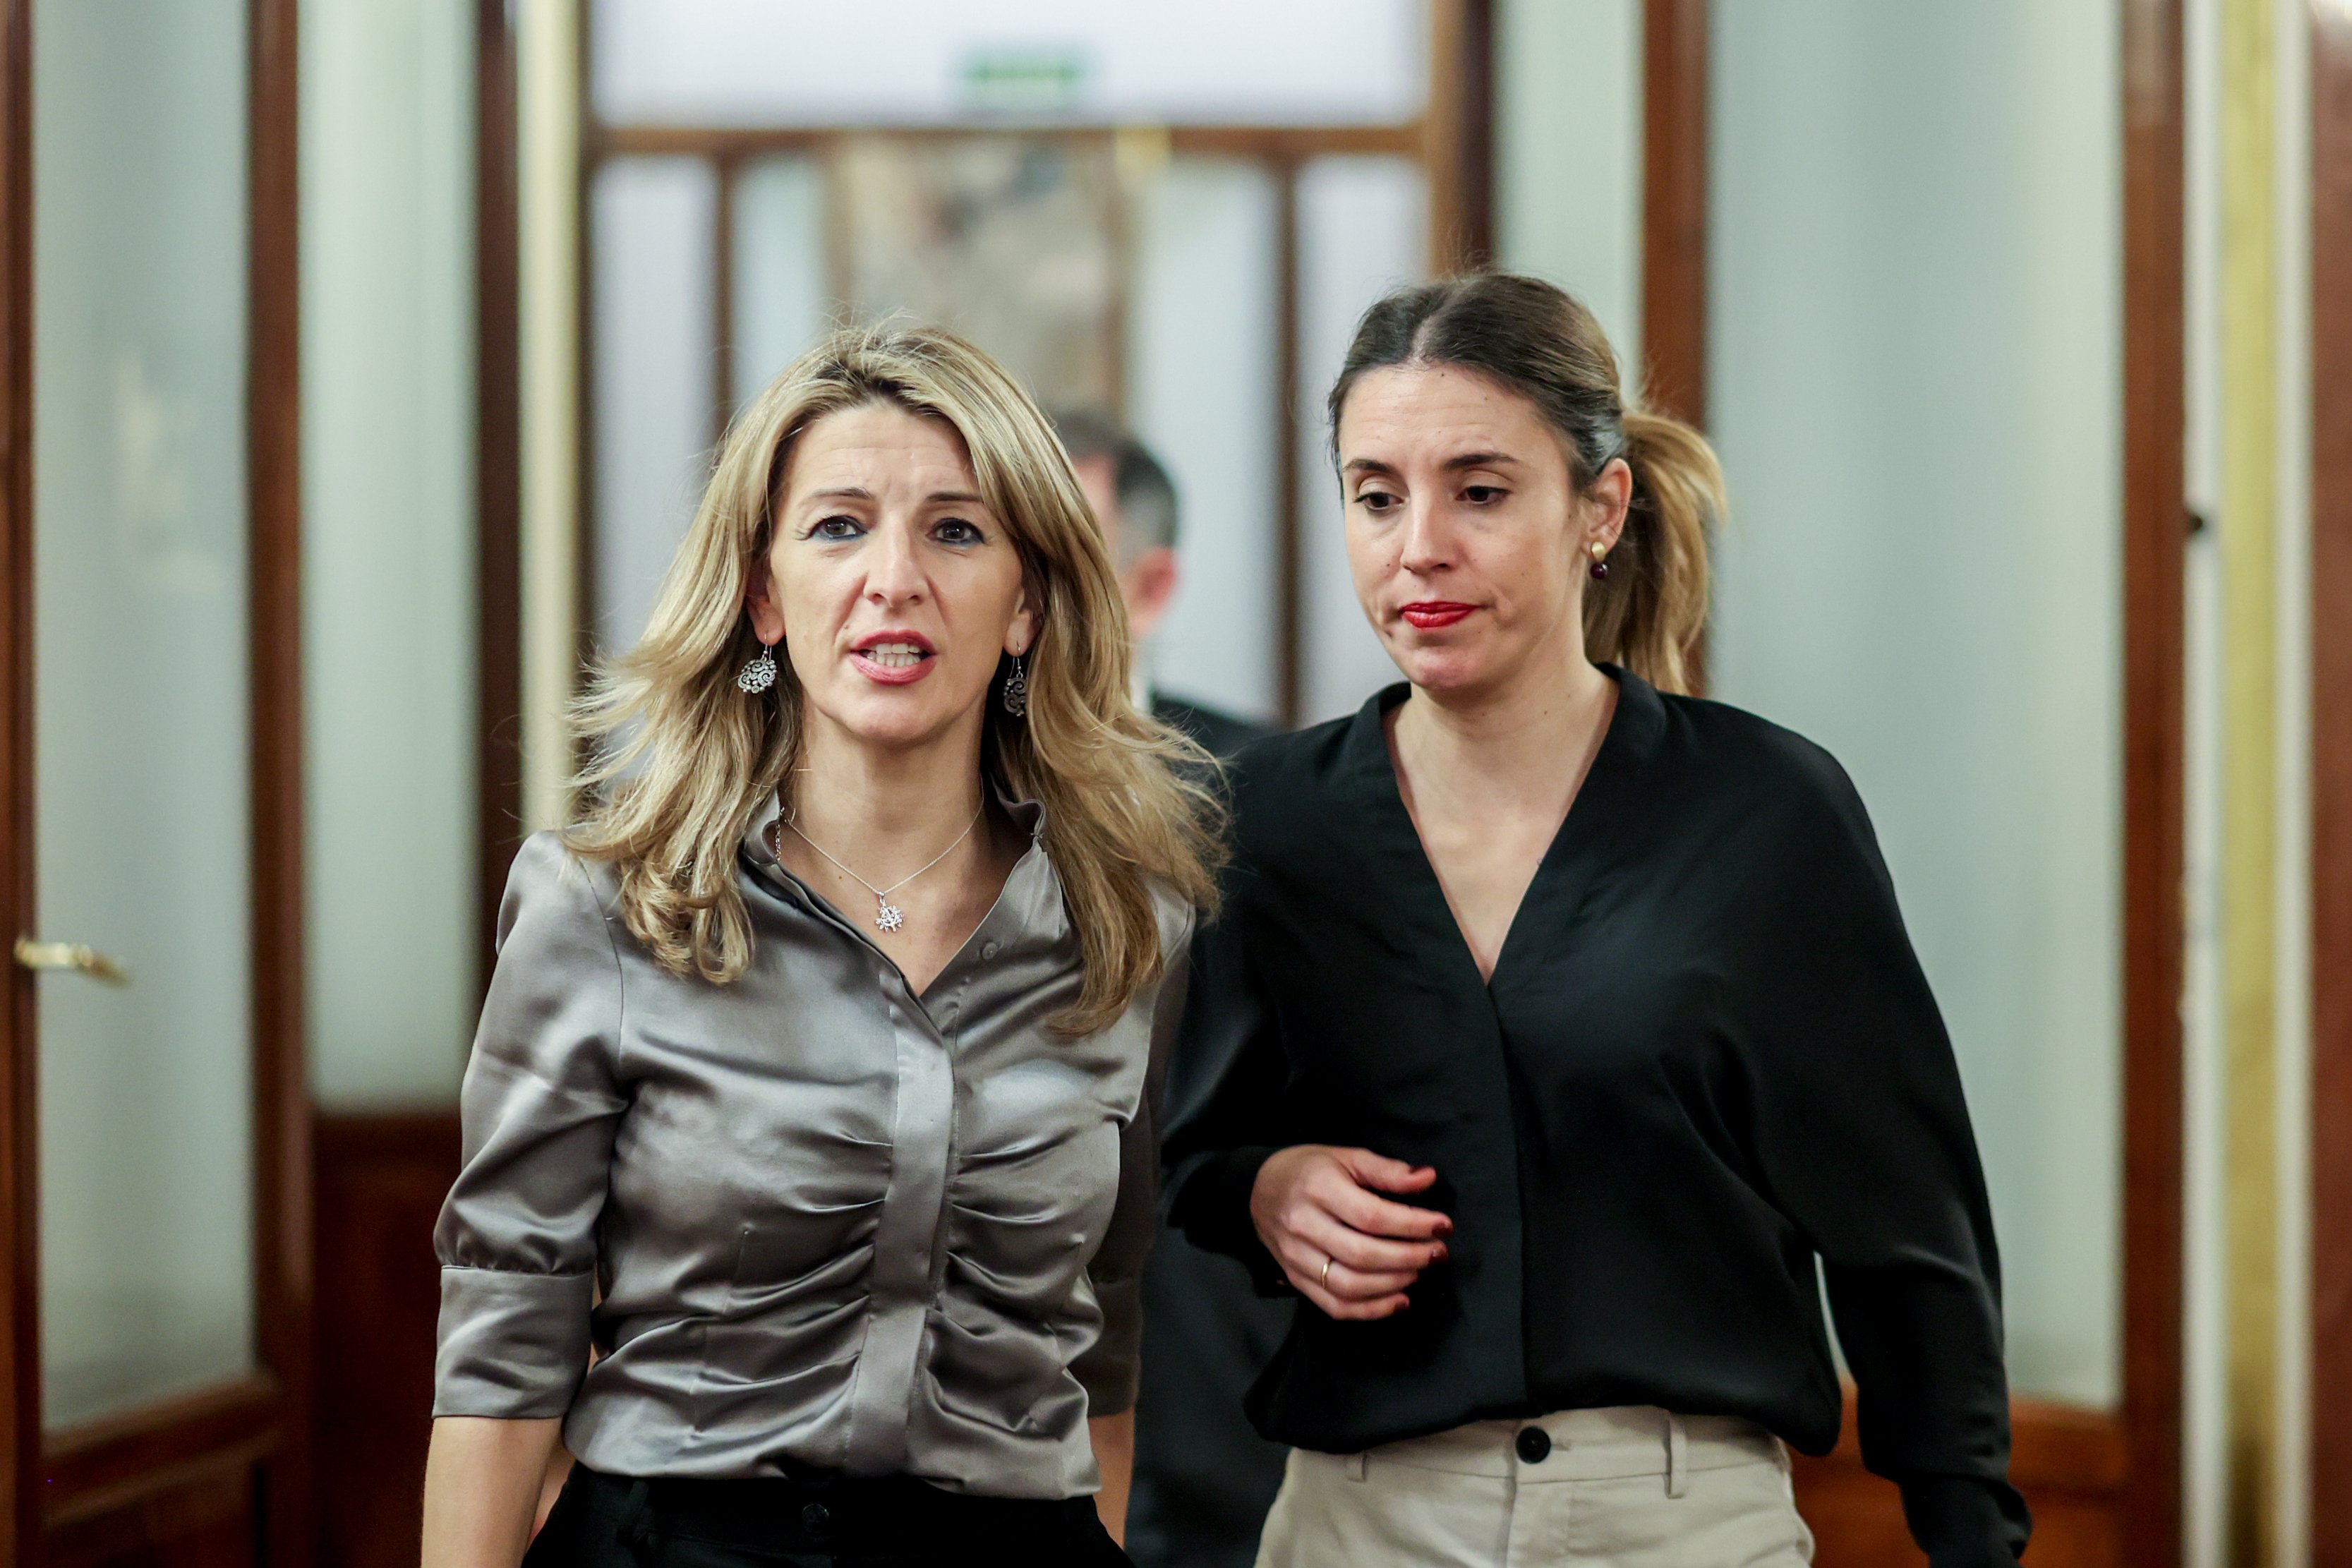 Luis Rubiales anuncia mesures legals contra Yolanda Díaz i Irene Montero: "Em defensaré als jutjats"